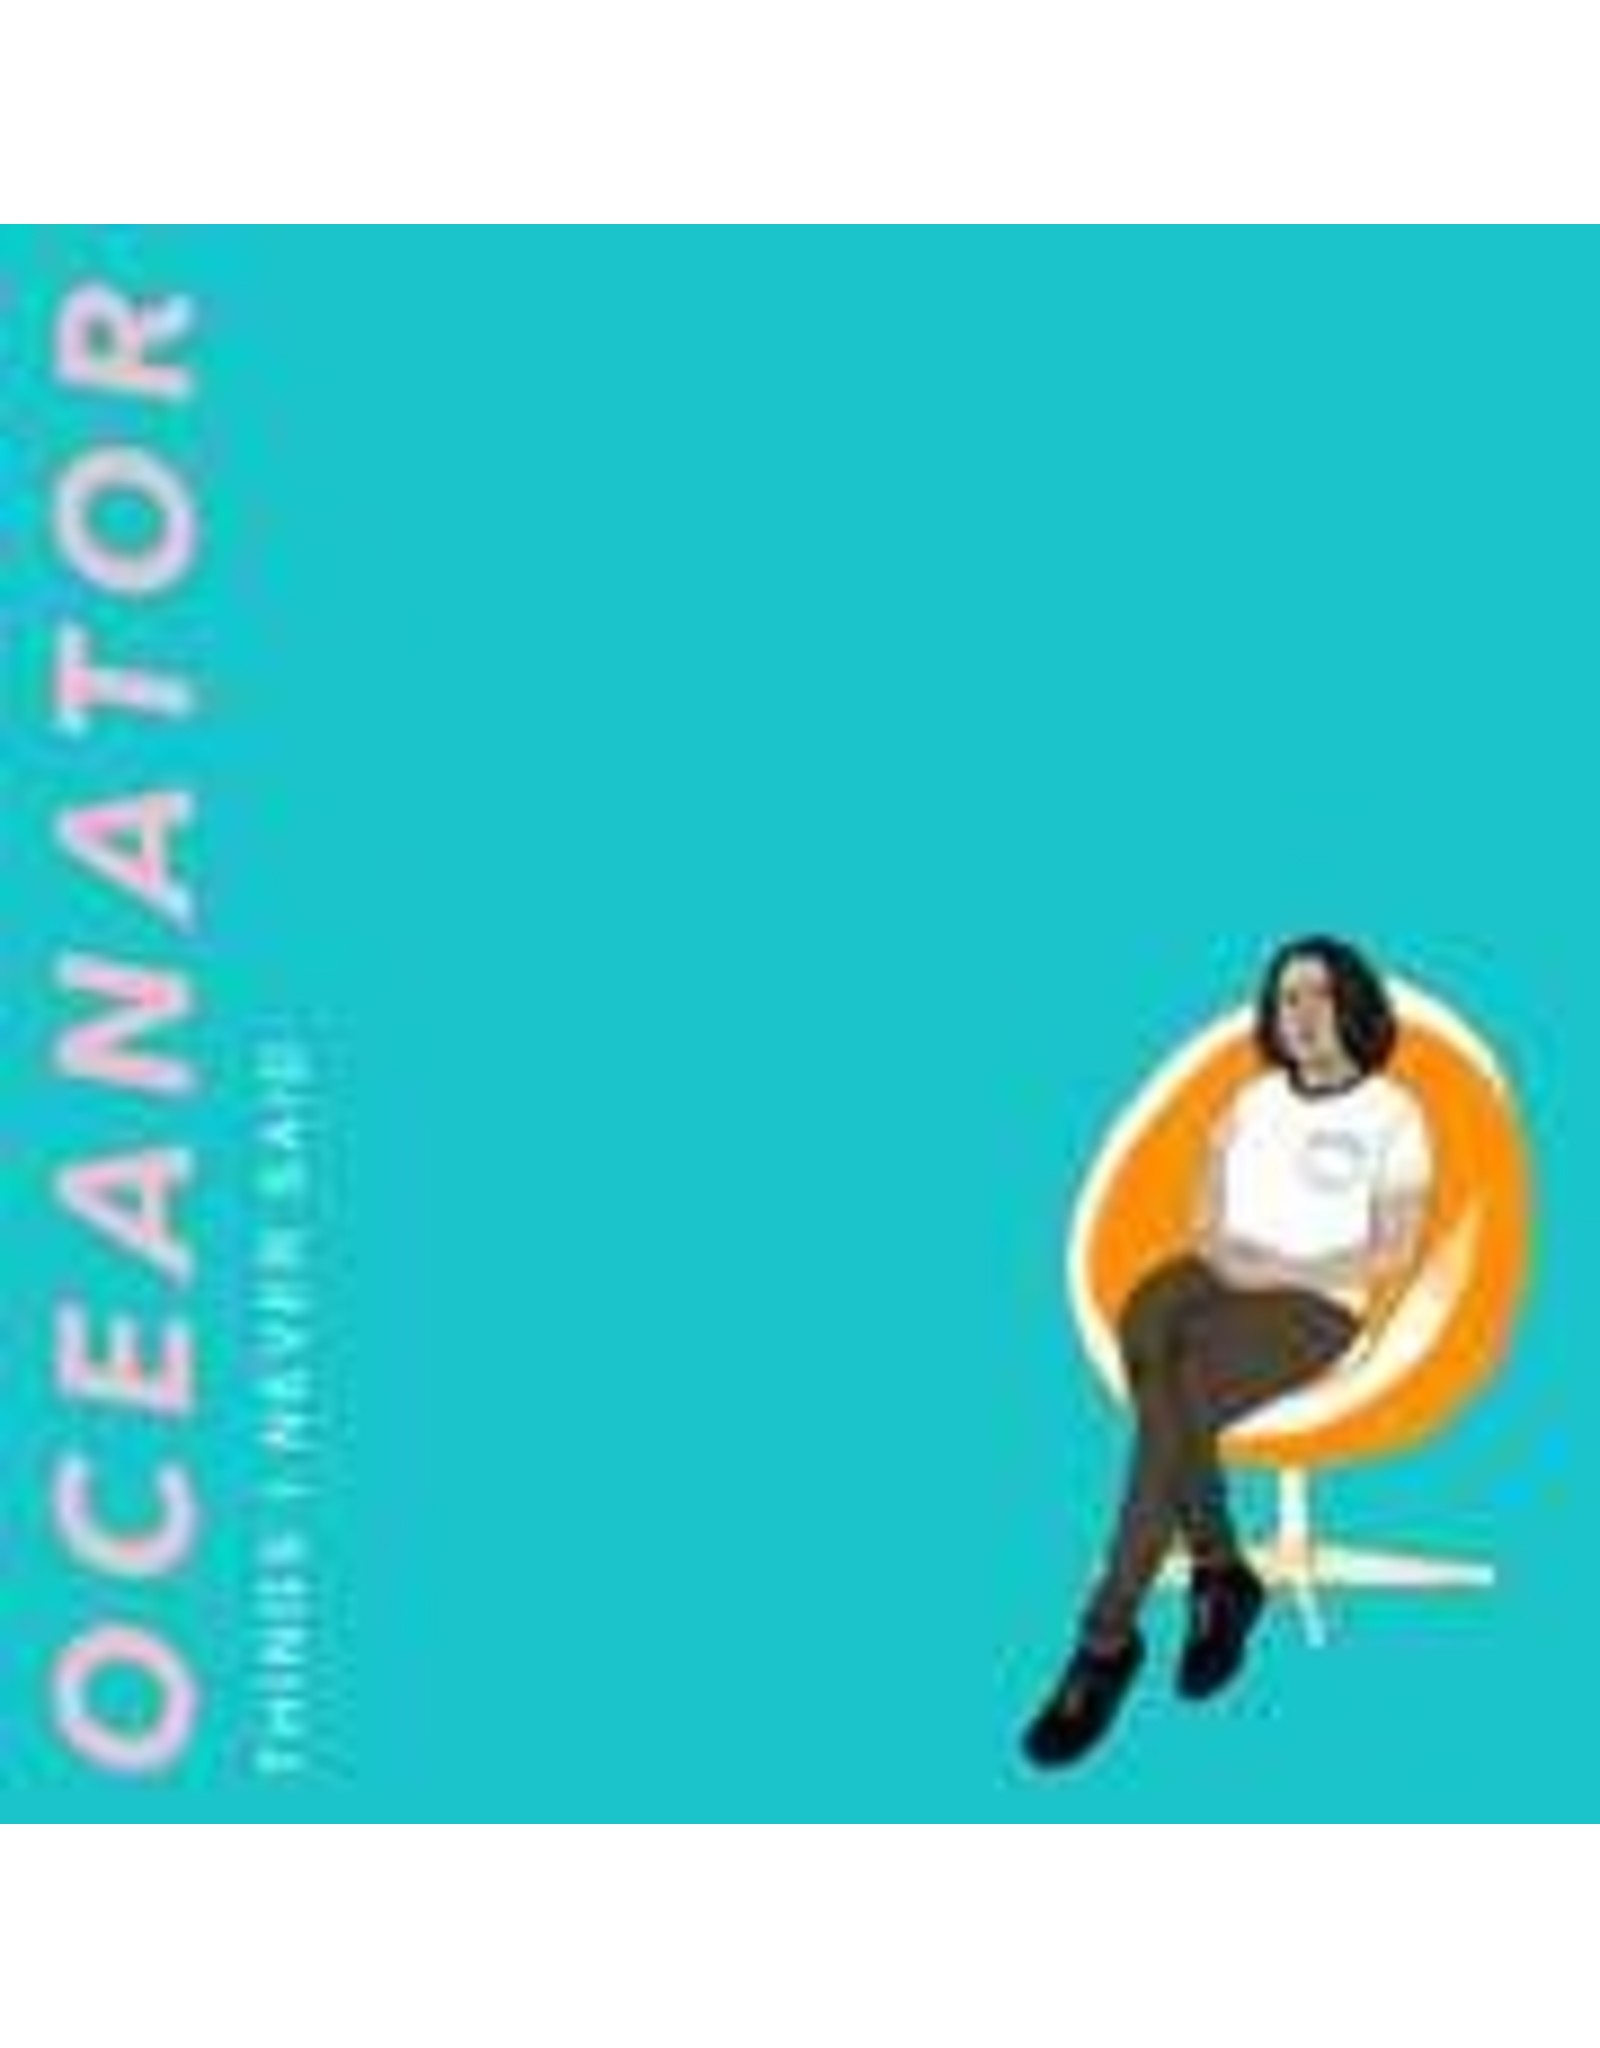 Oceanator / Things I Never Said - orange swirl vinyl